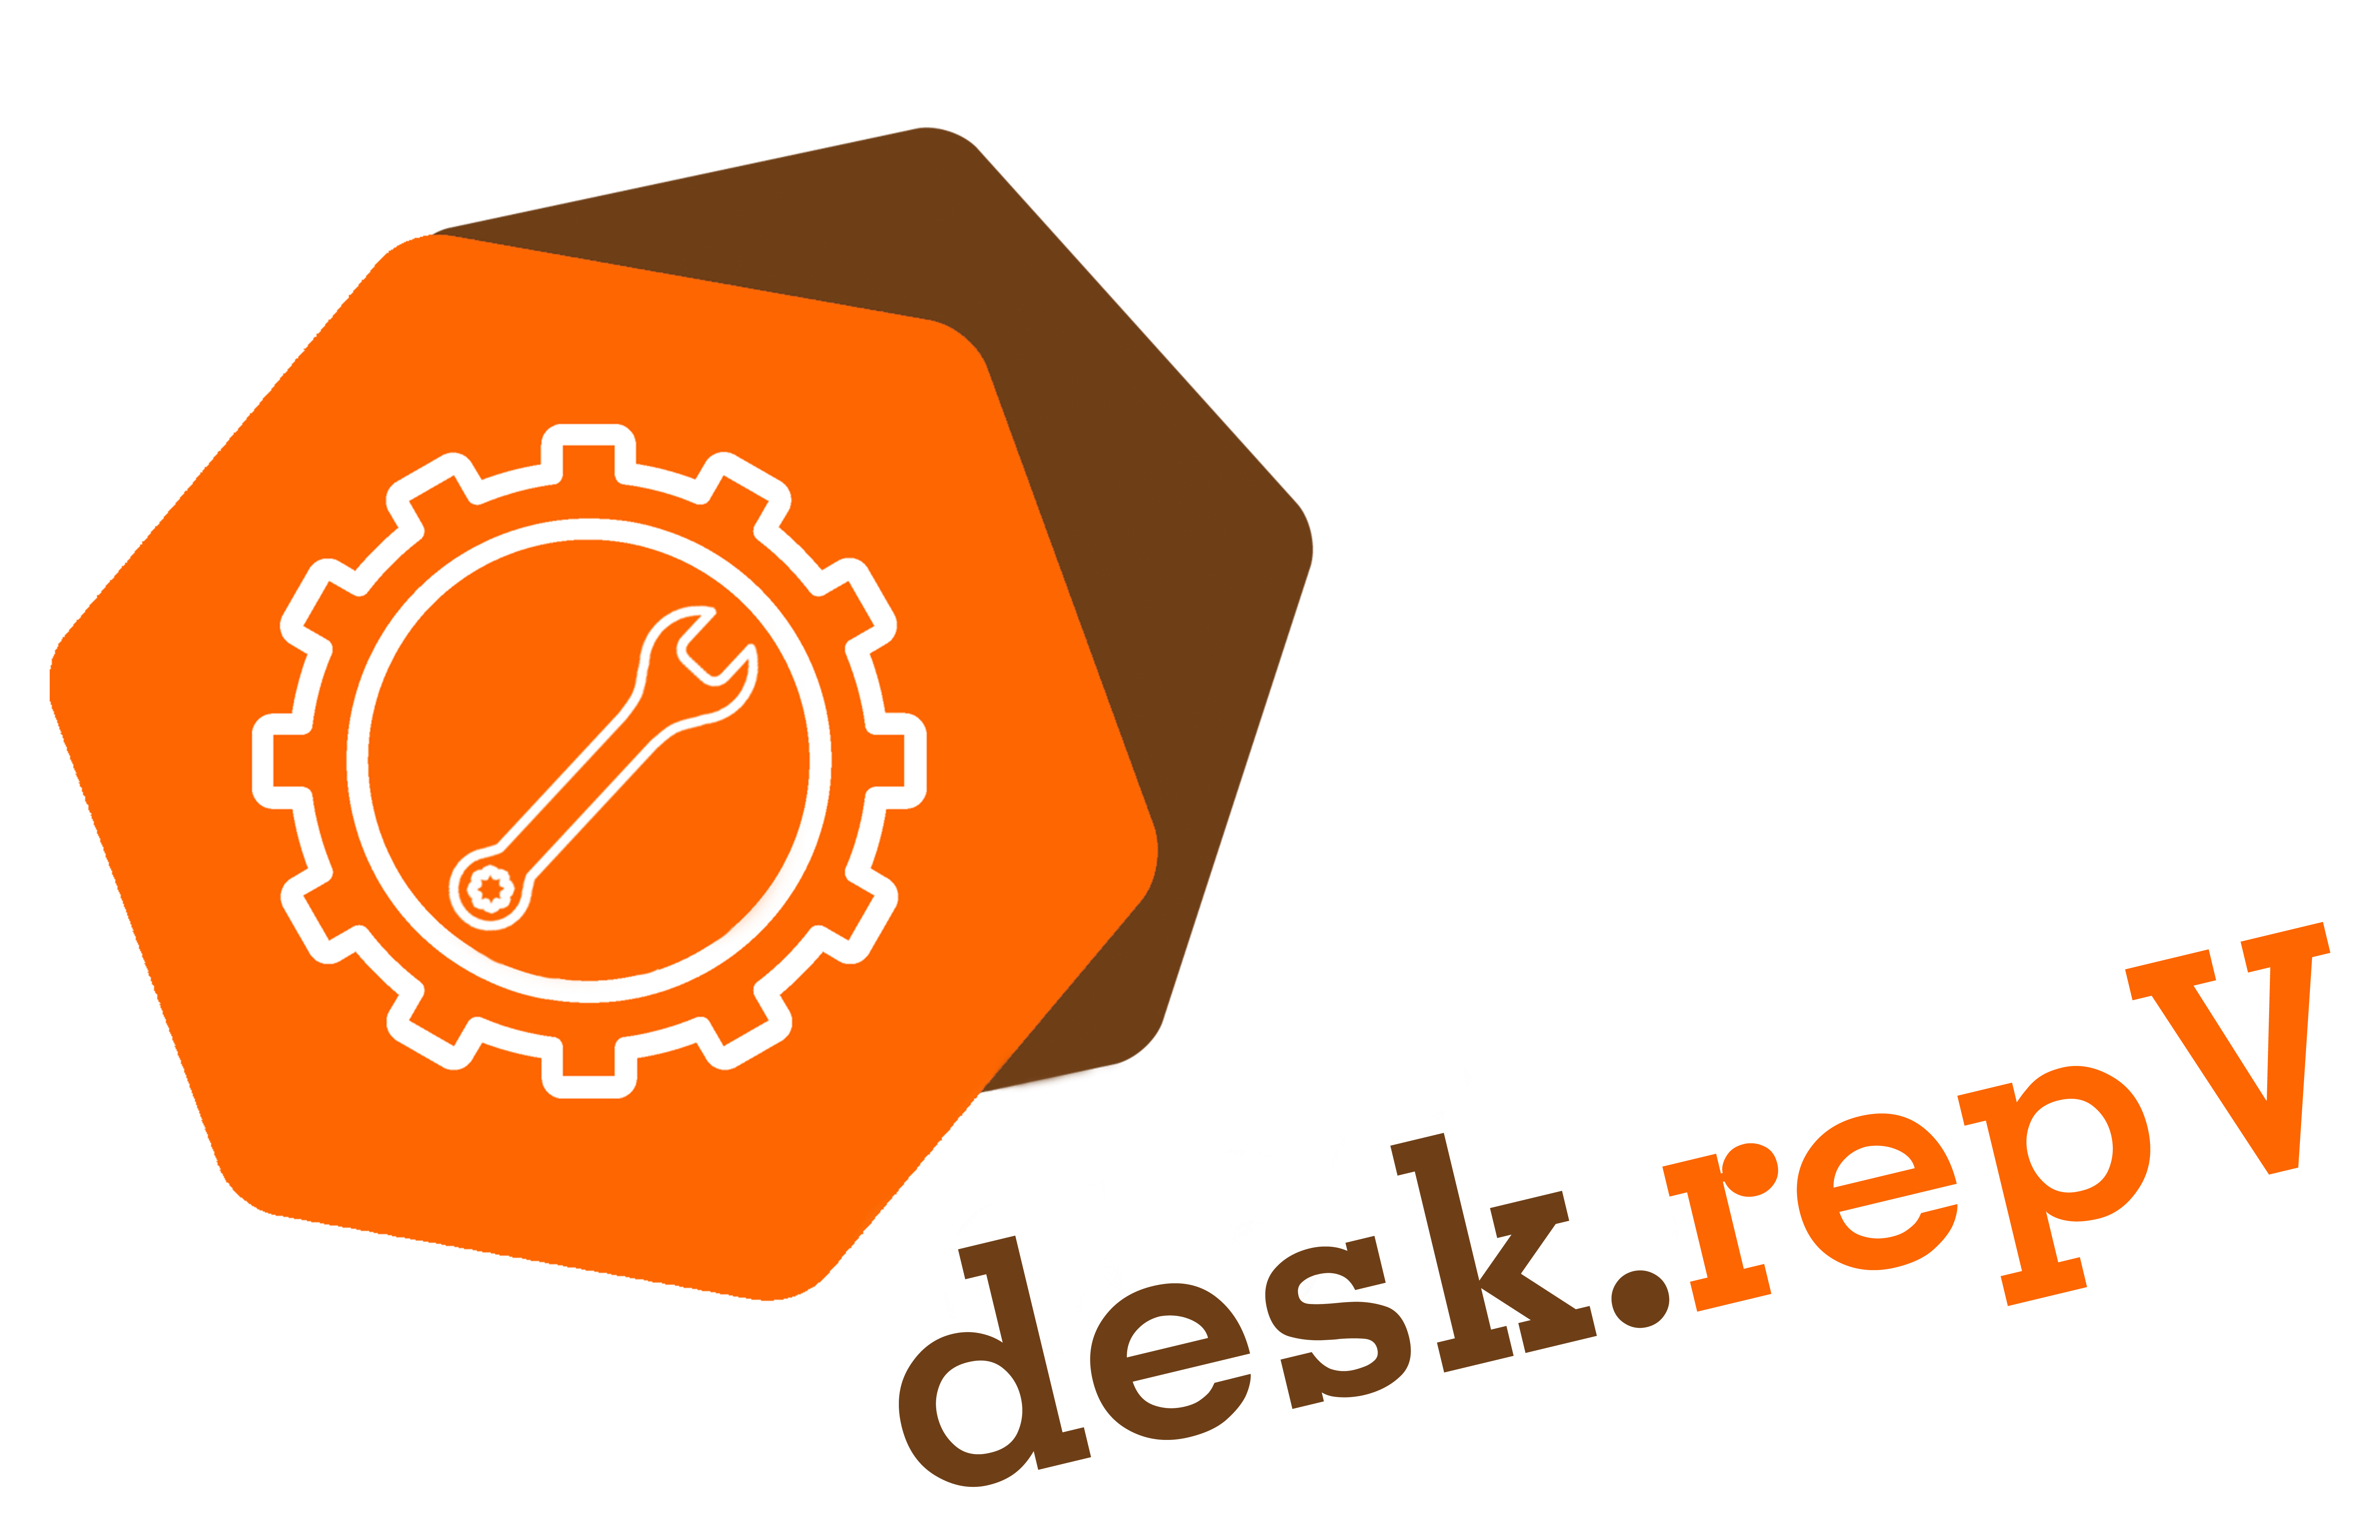 desk.repV / Field Service Management Software